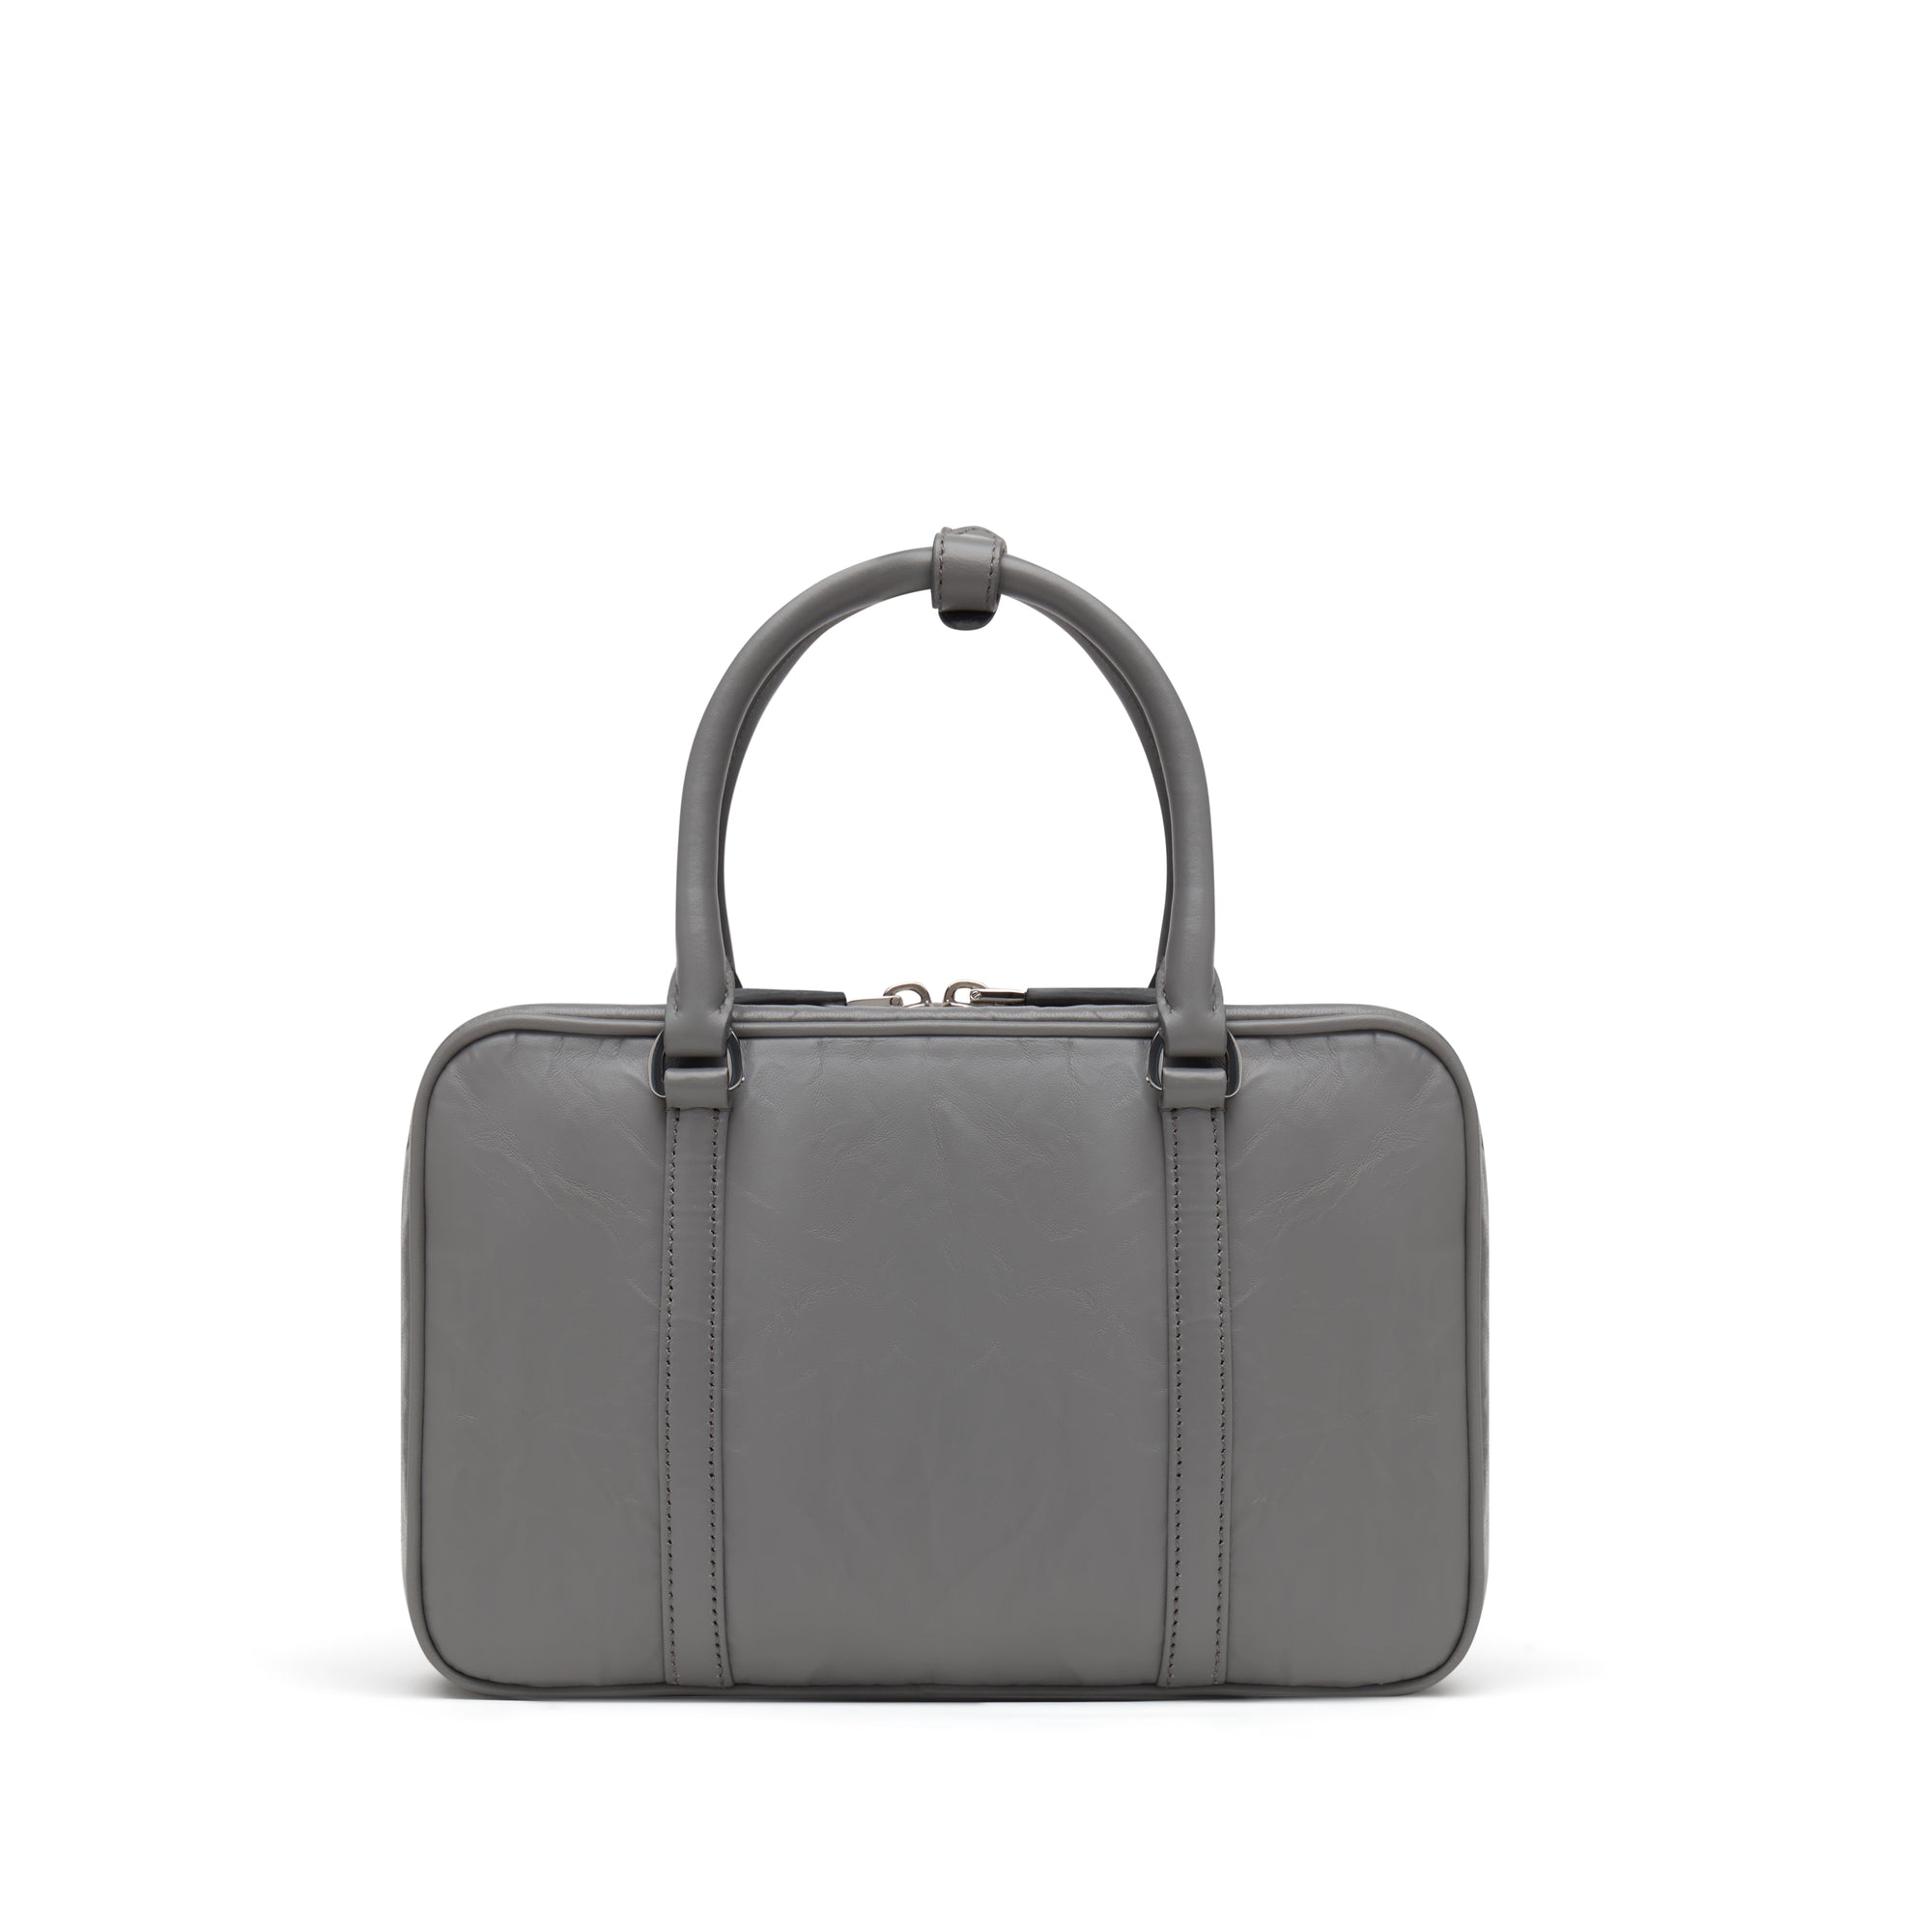 Prada - Women’s Medium Top Handle Handbag - (Slate Grey) view 3